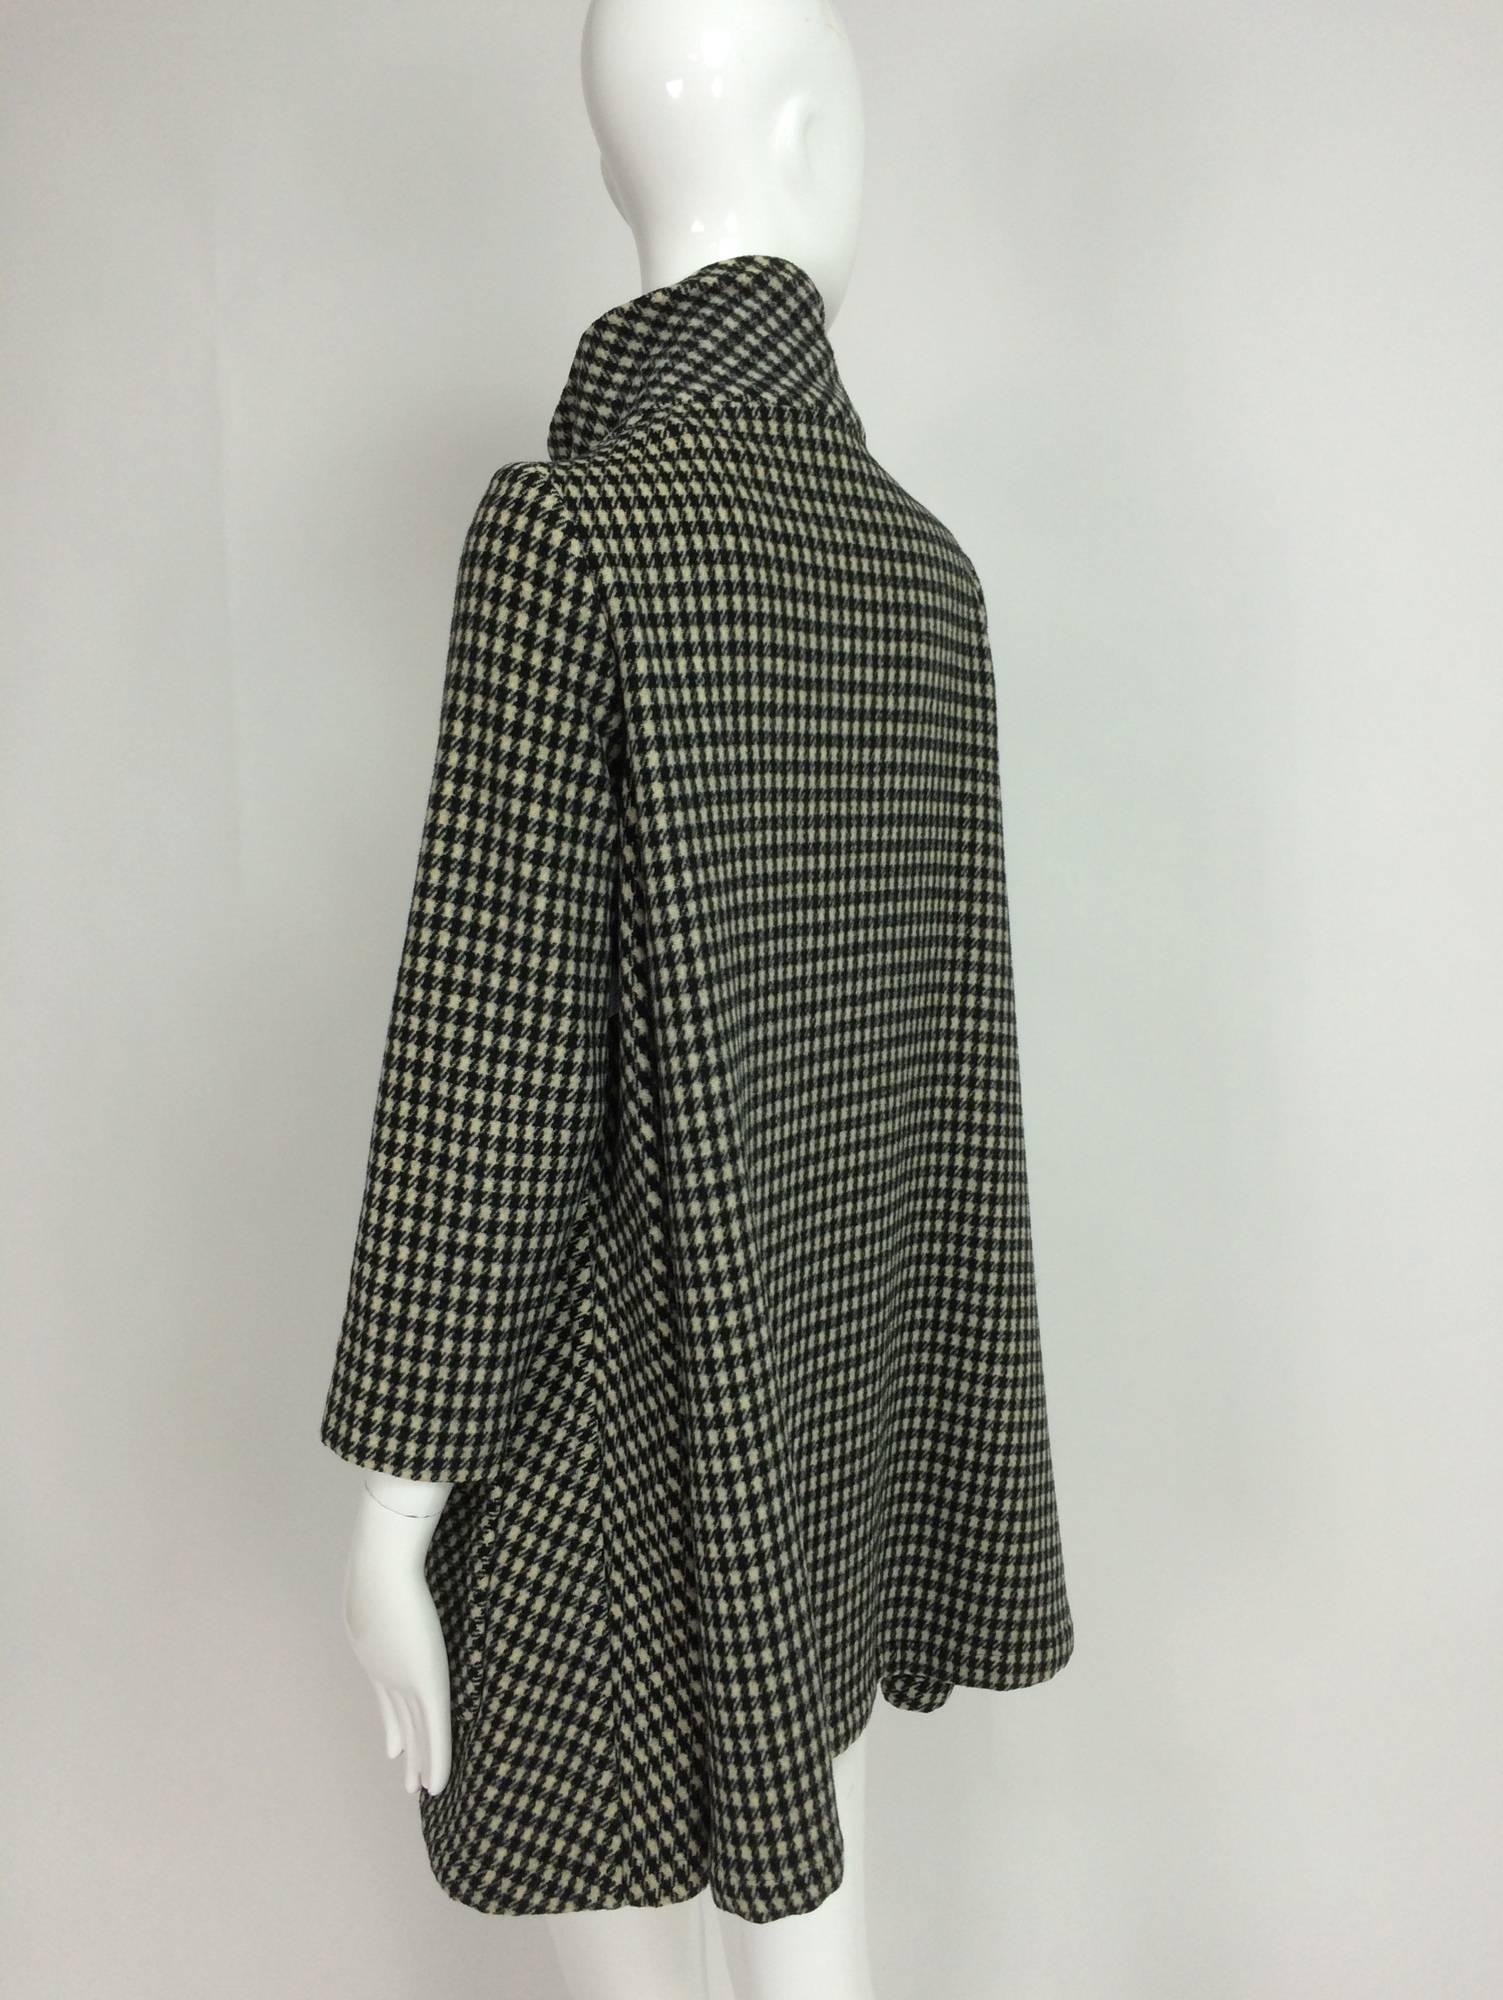 Mod black & white check zip front mini tent coat 1960s Jordan Marsh England 3